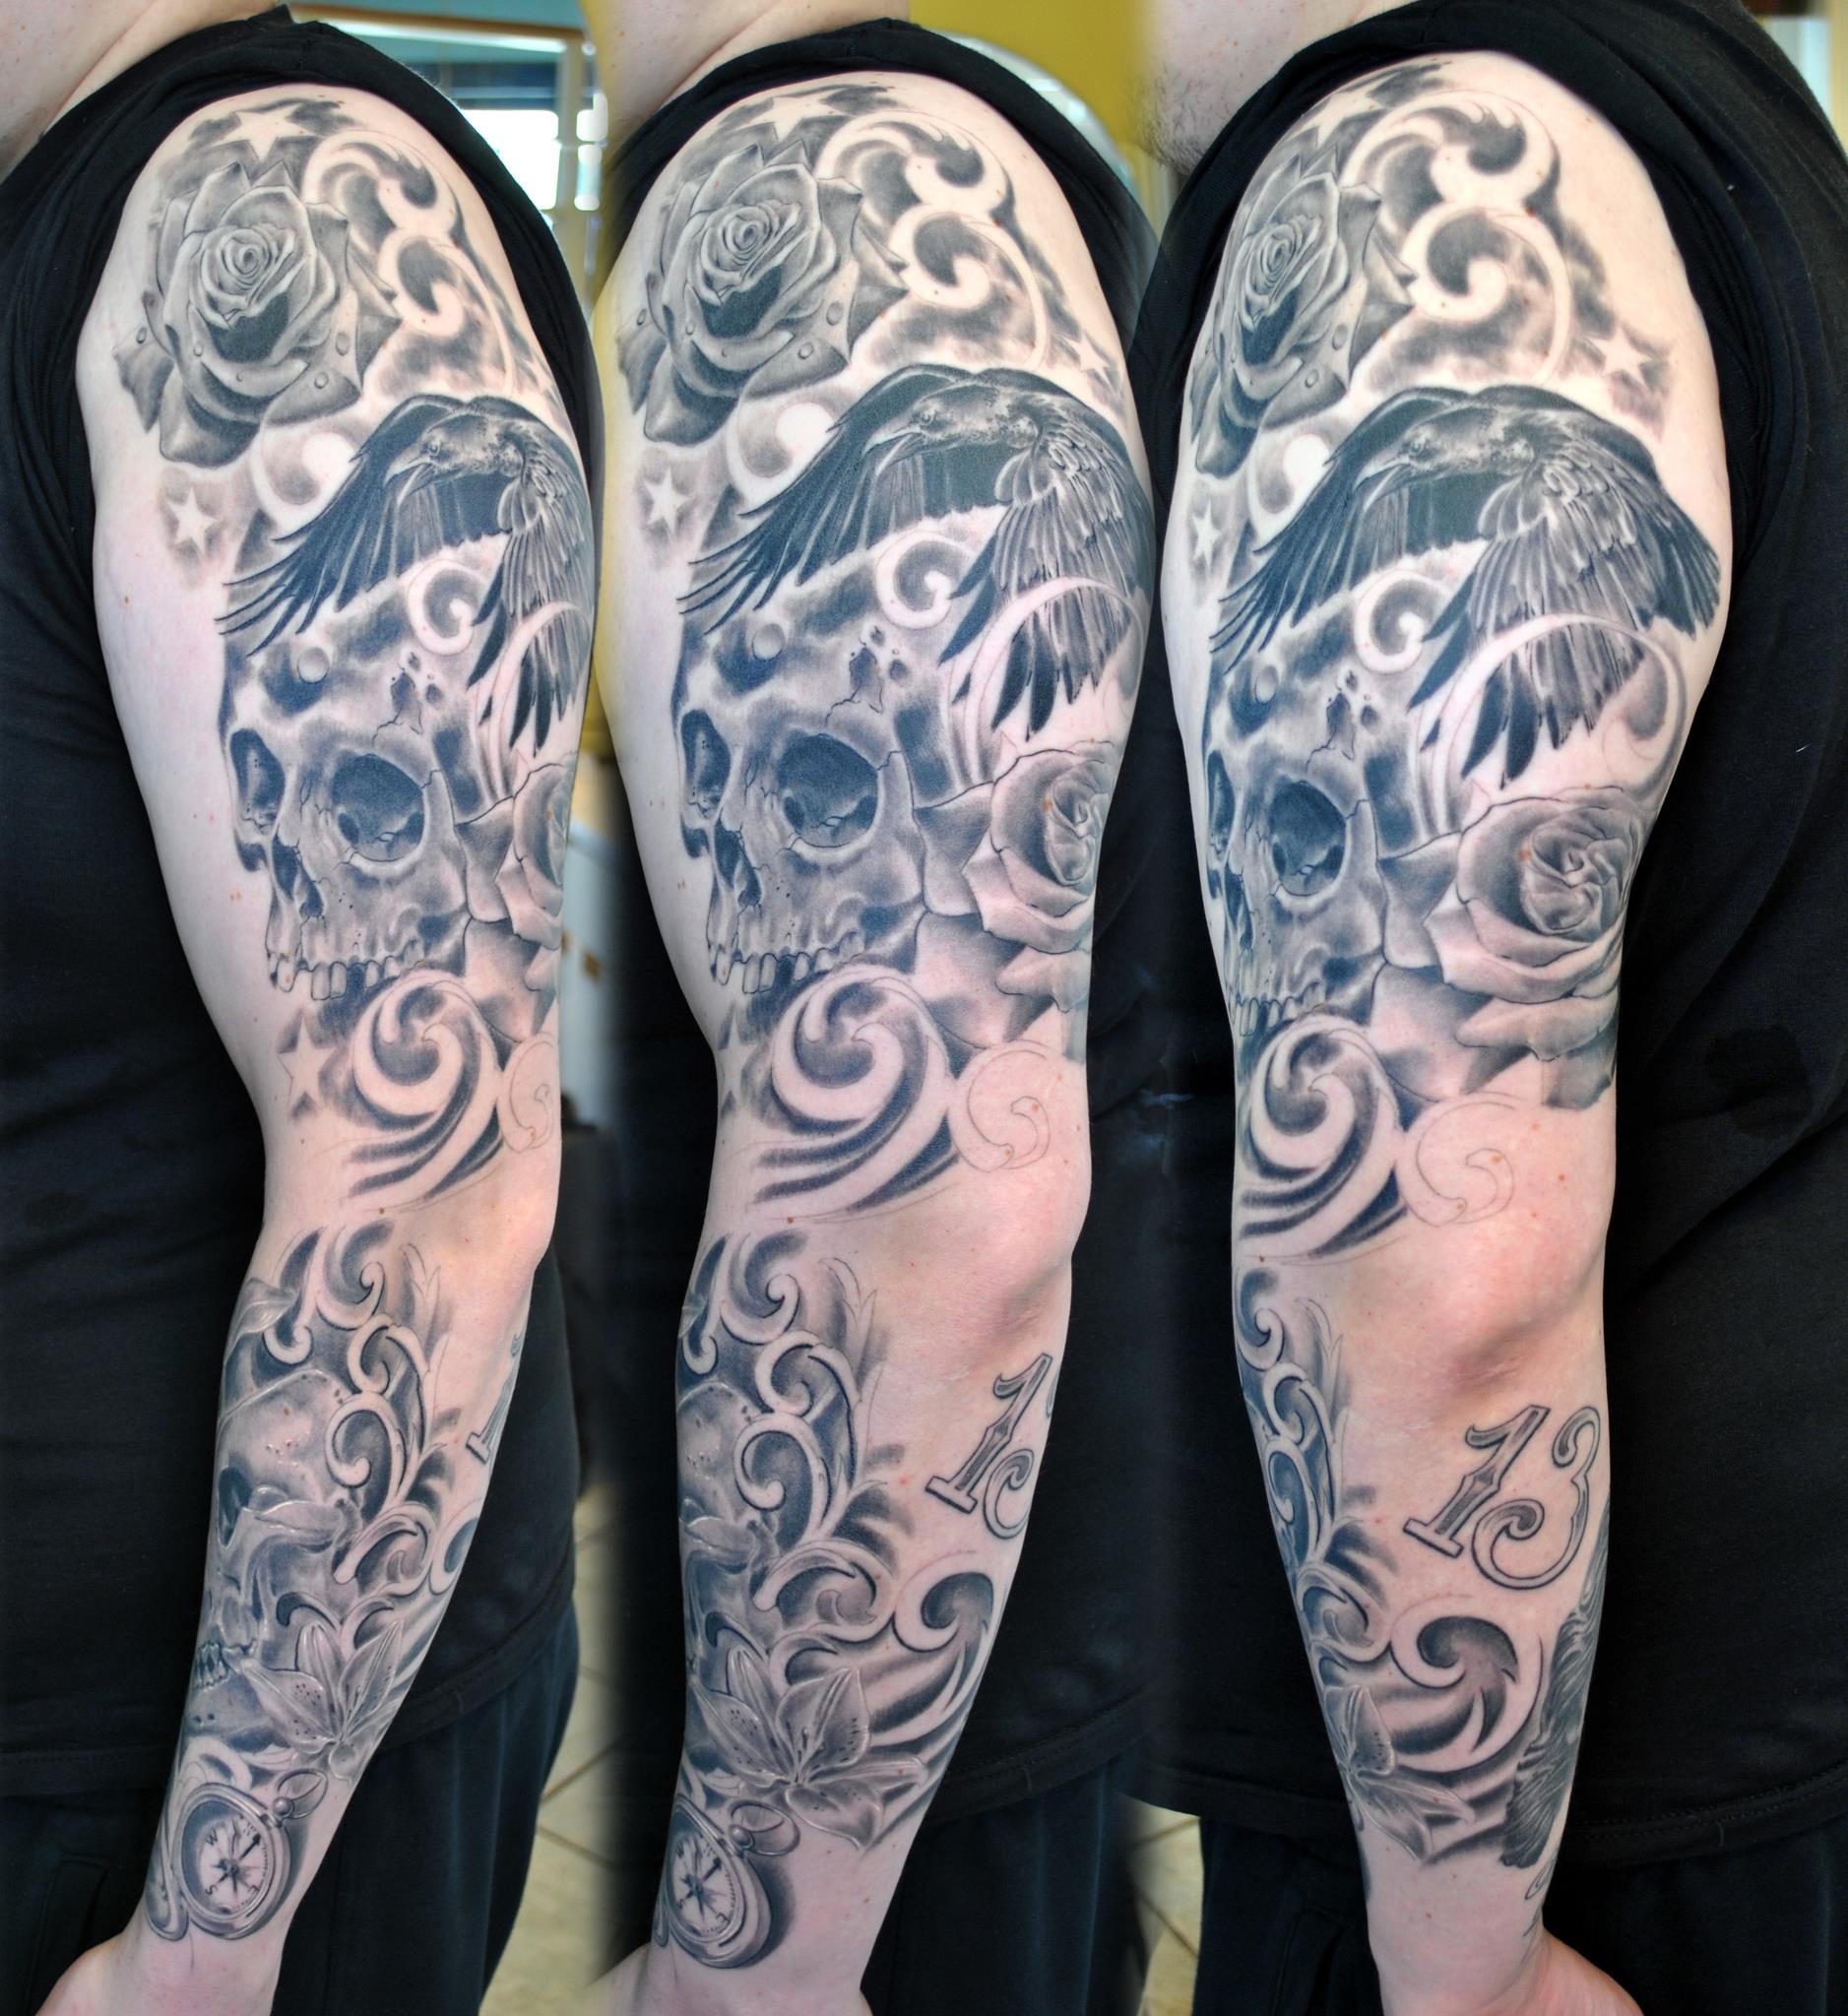 Awesome Sleeve Tattoo Design Ideas - Sleeve Tattoo Design 13